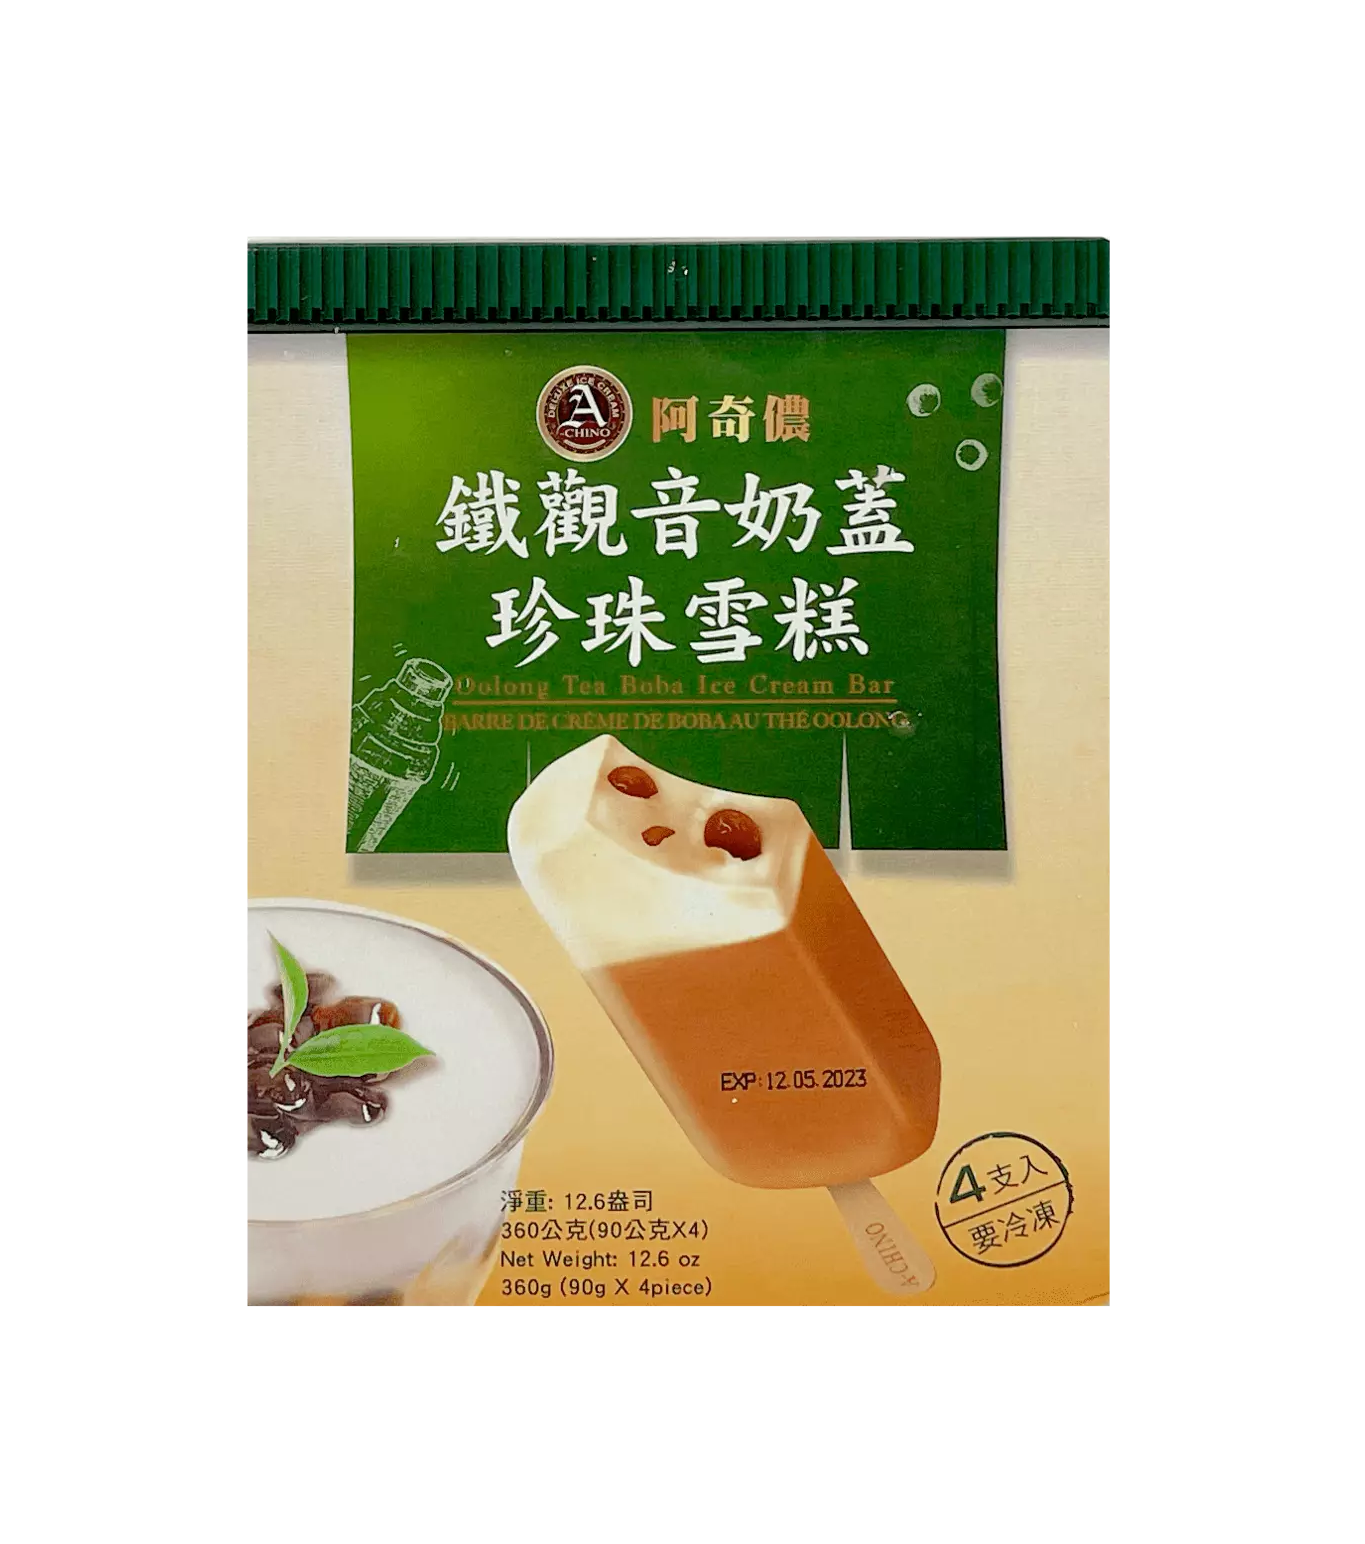 Ice Cream Bar With Oolong Tea Boba Flavour 360g AQN Taiwan